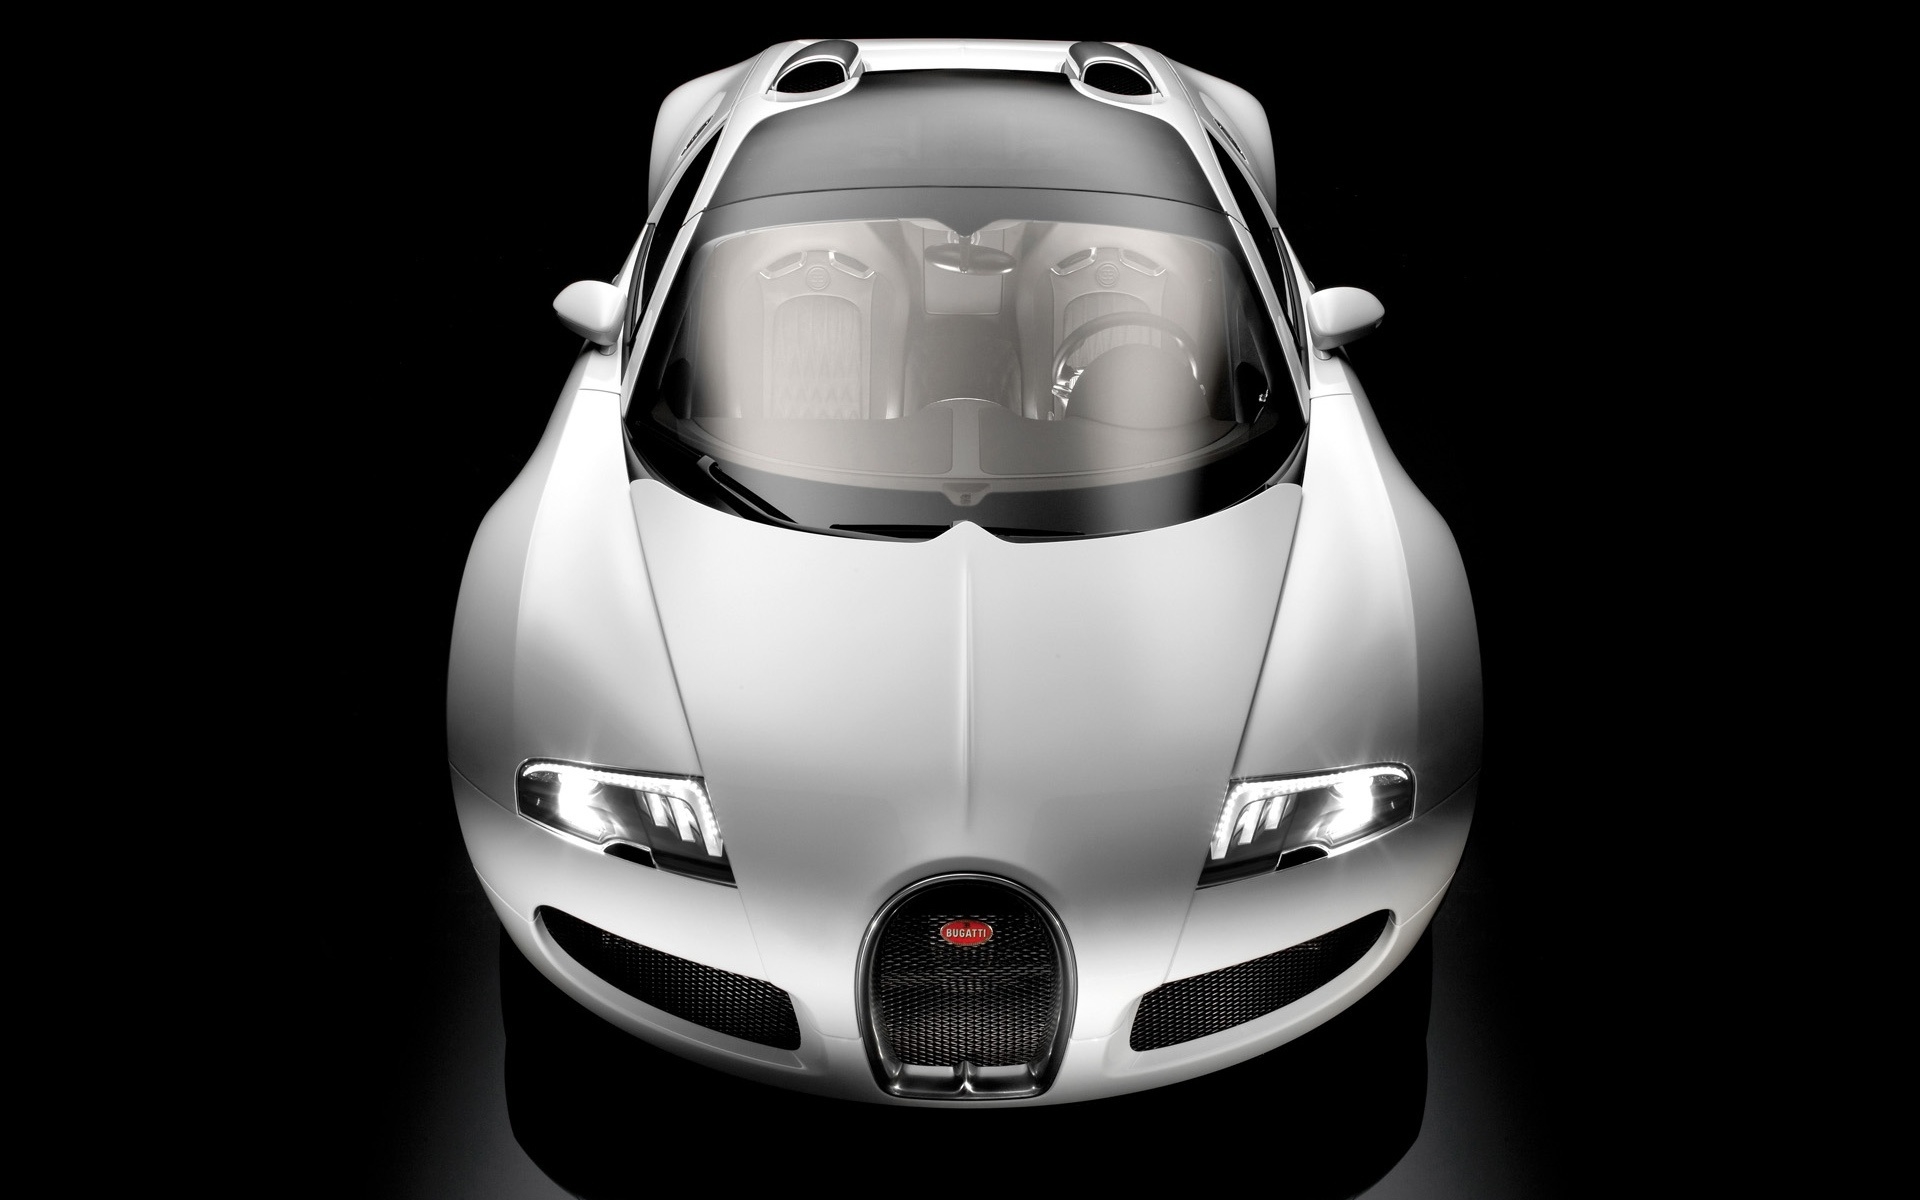 Bugatti Veyron 16.4 Grand Sport 2009 - Front Top Studio for 1920 x 1200 widescreen resolution